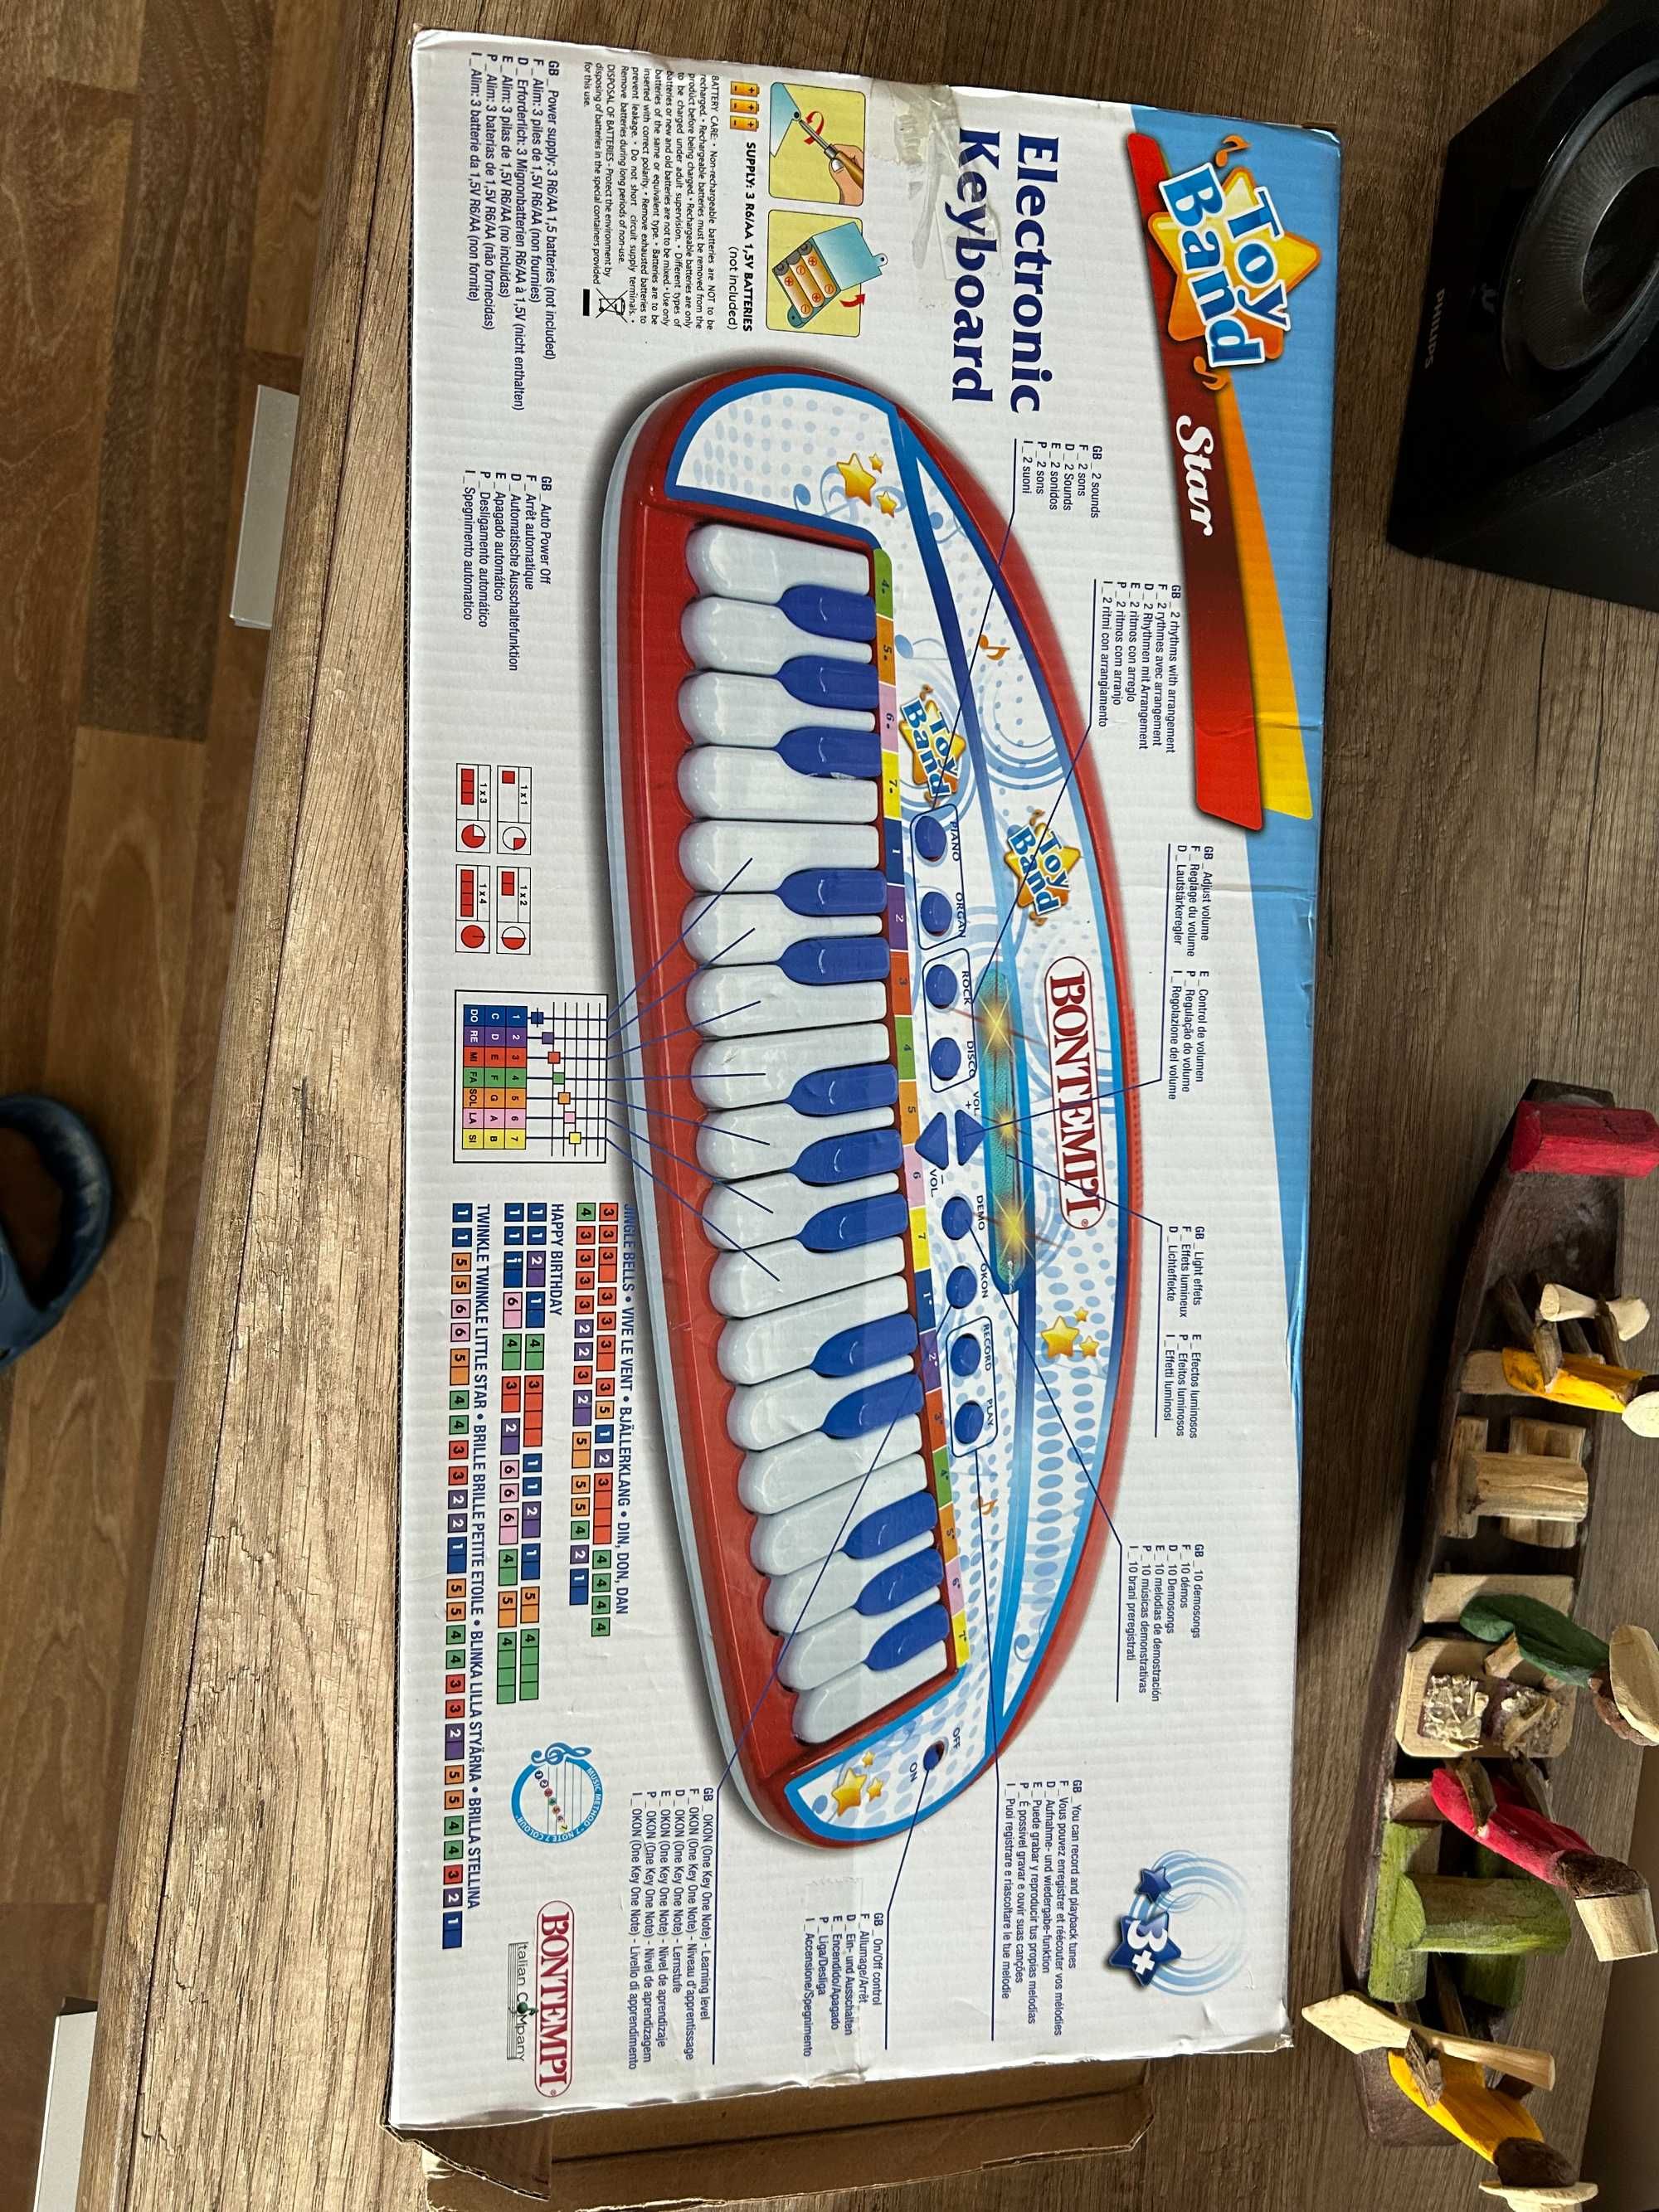 keyboard Toy Band